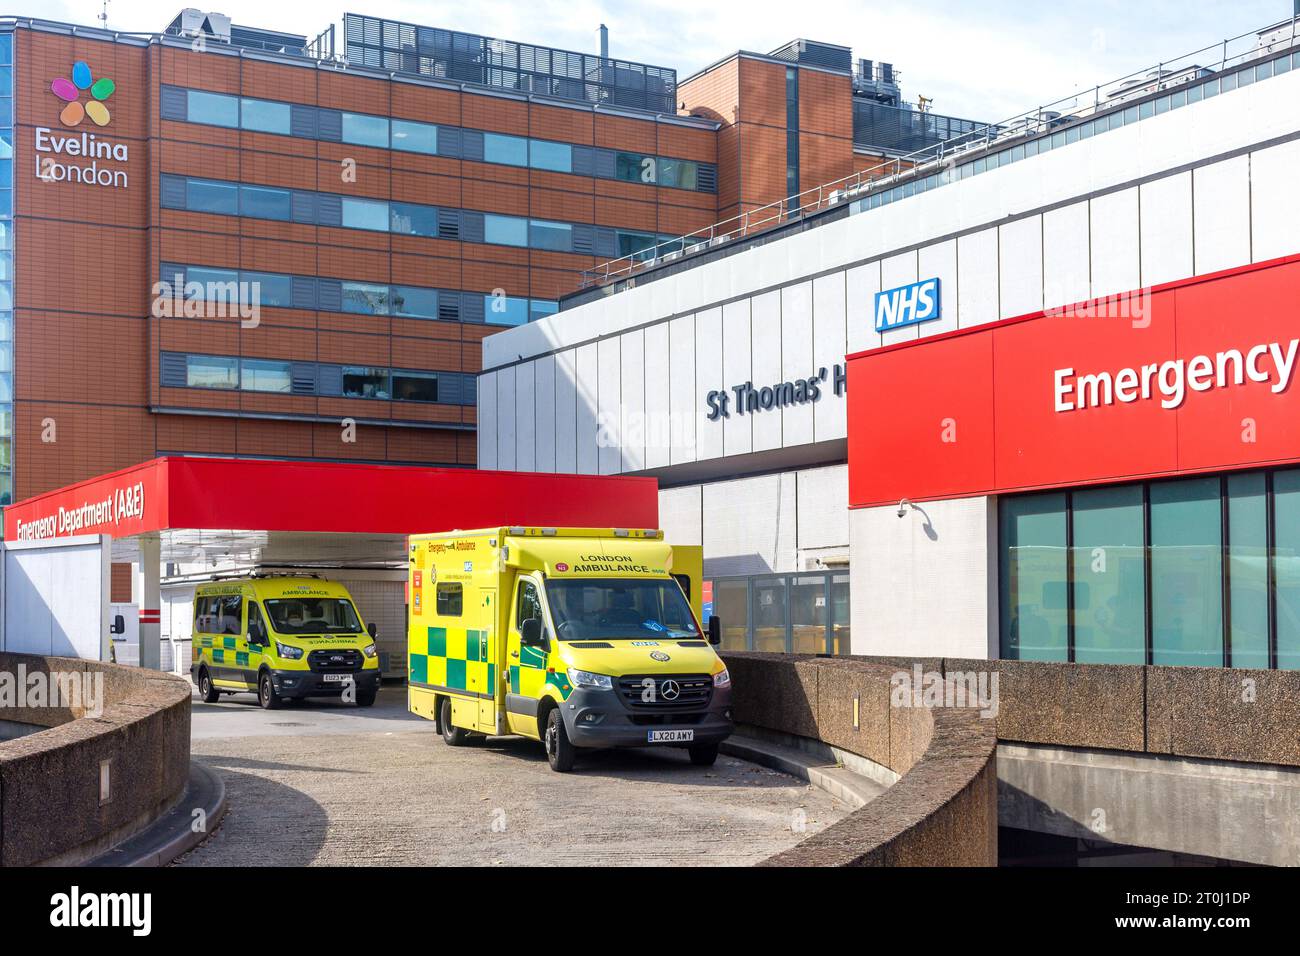 Ingresso principale, pronto soccorso (A&e), St Thomas' NHS Hospital, Lambeth Palace Road, Borough of Lambeth, Greater London, Inghilterra, Regno Unito Foto Stock